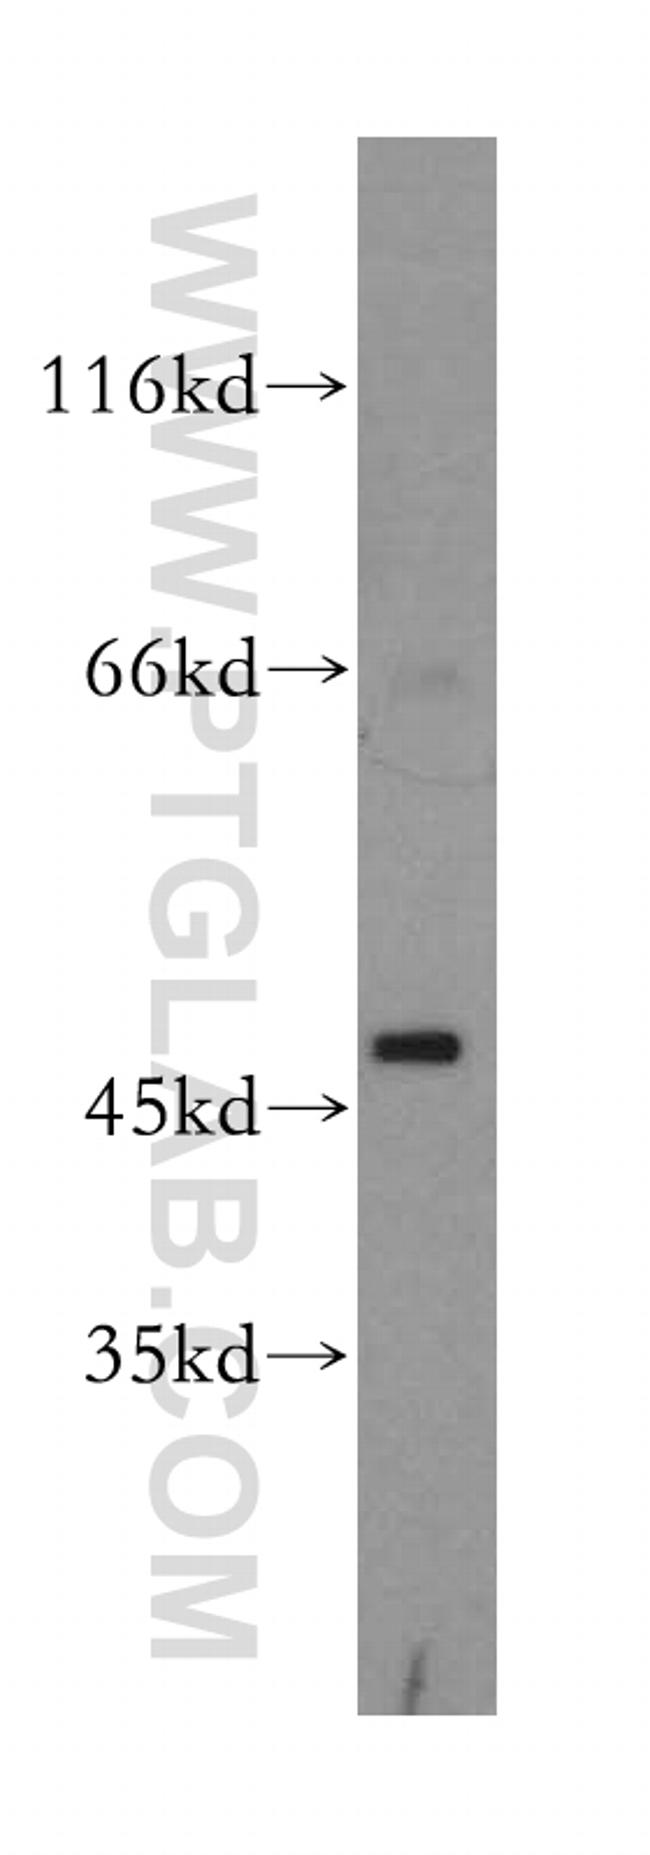 Decorin Antibody in Western Blot (WB)